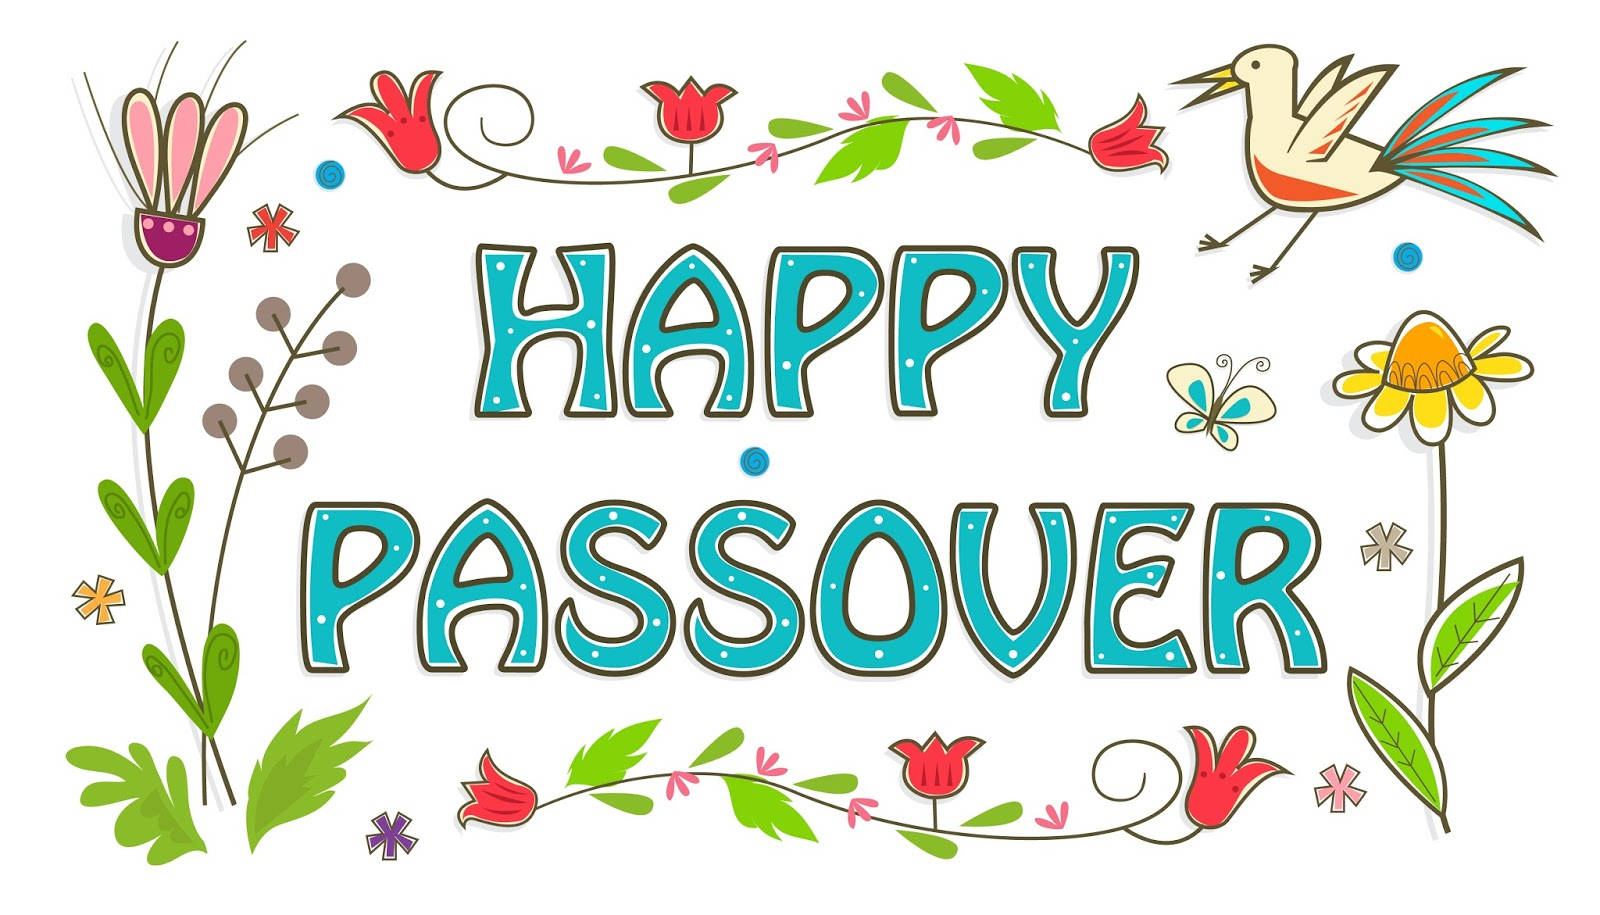 Passover Flower Art Background